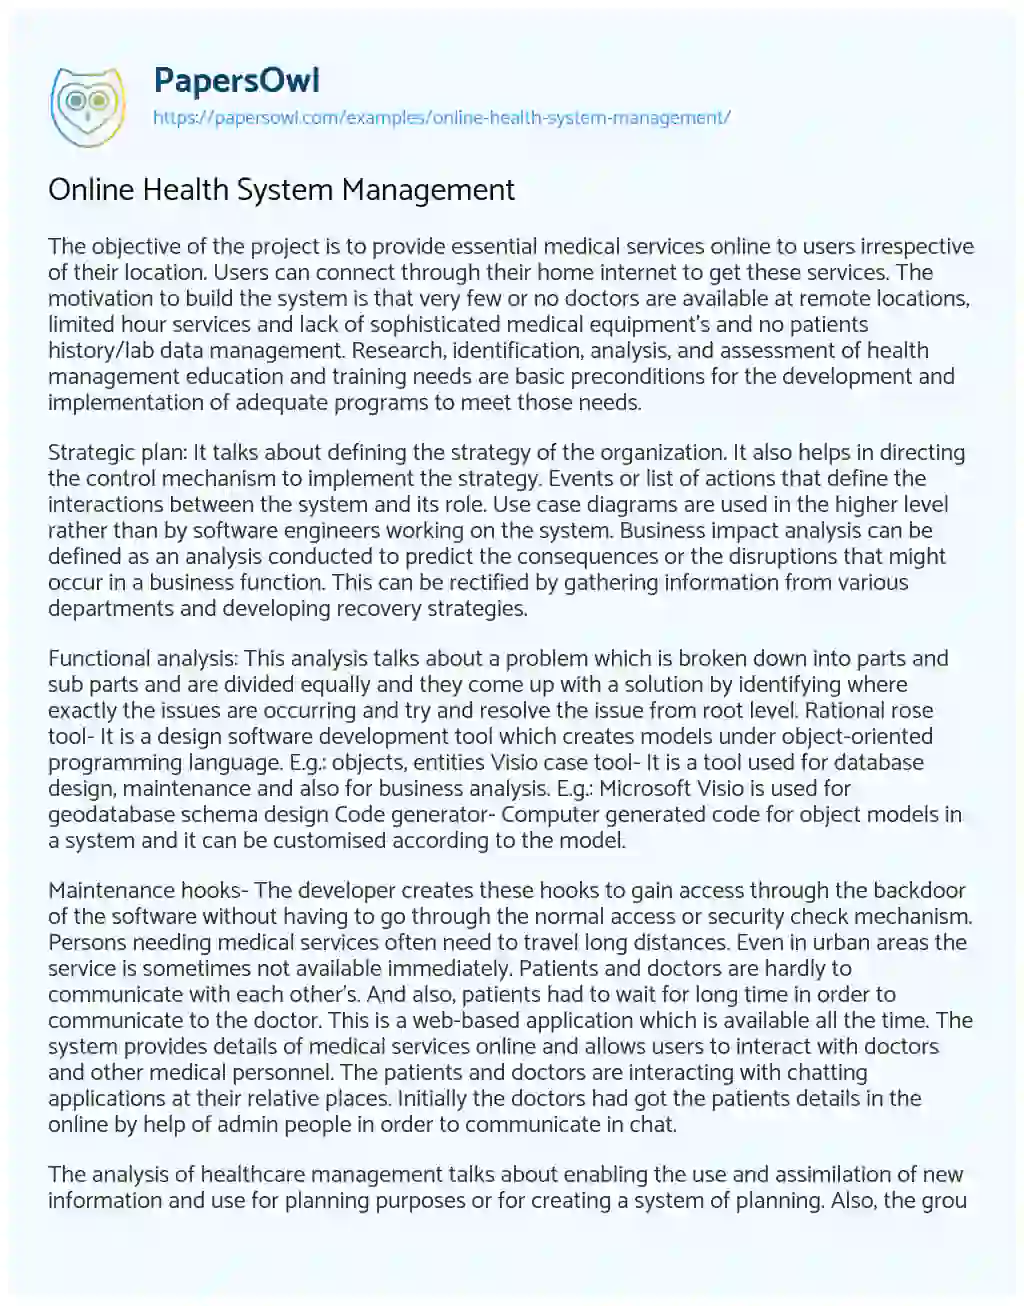 Essay on Online Health System Management